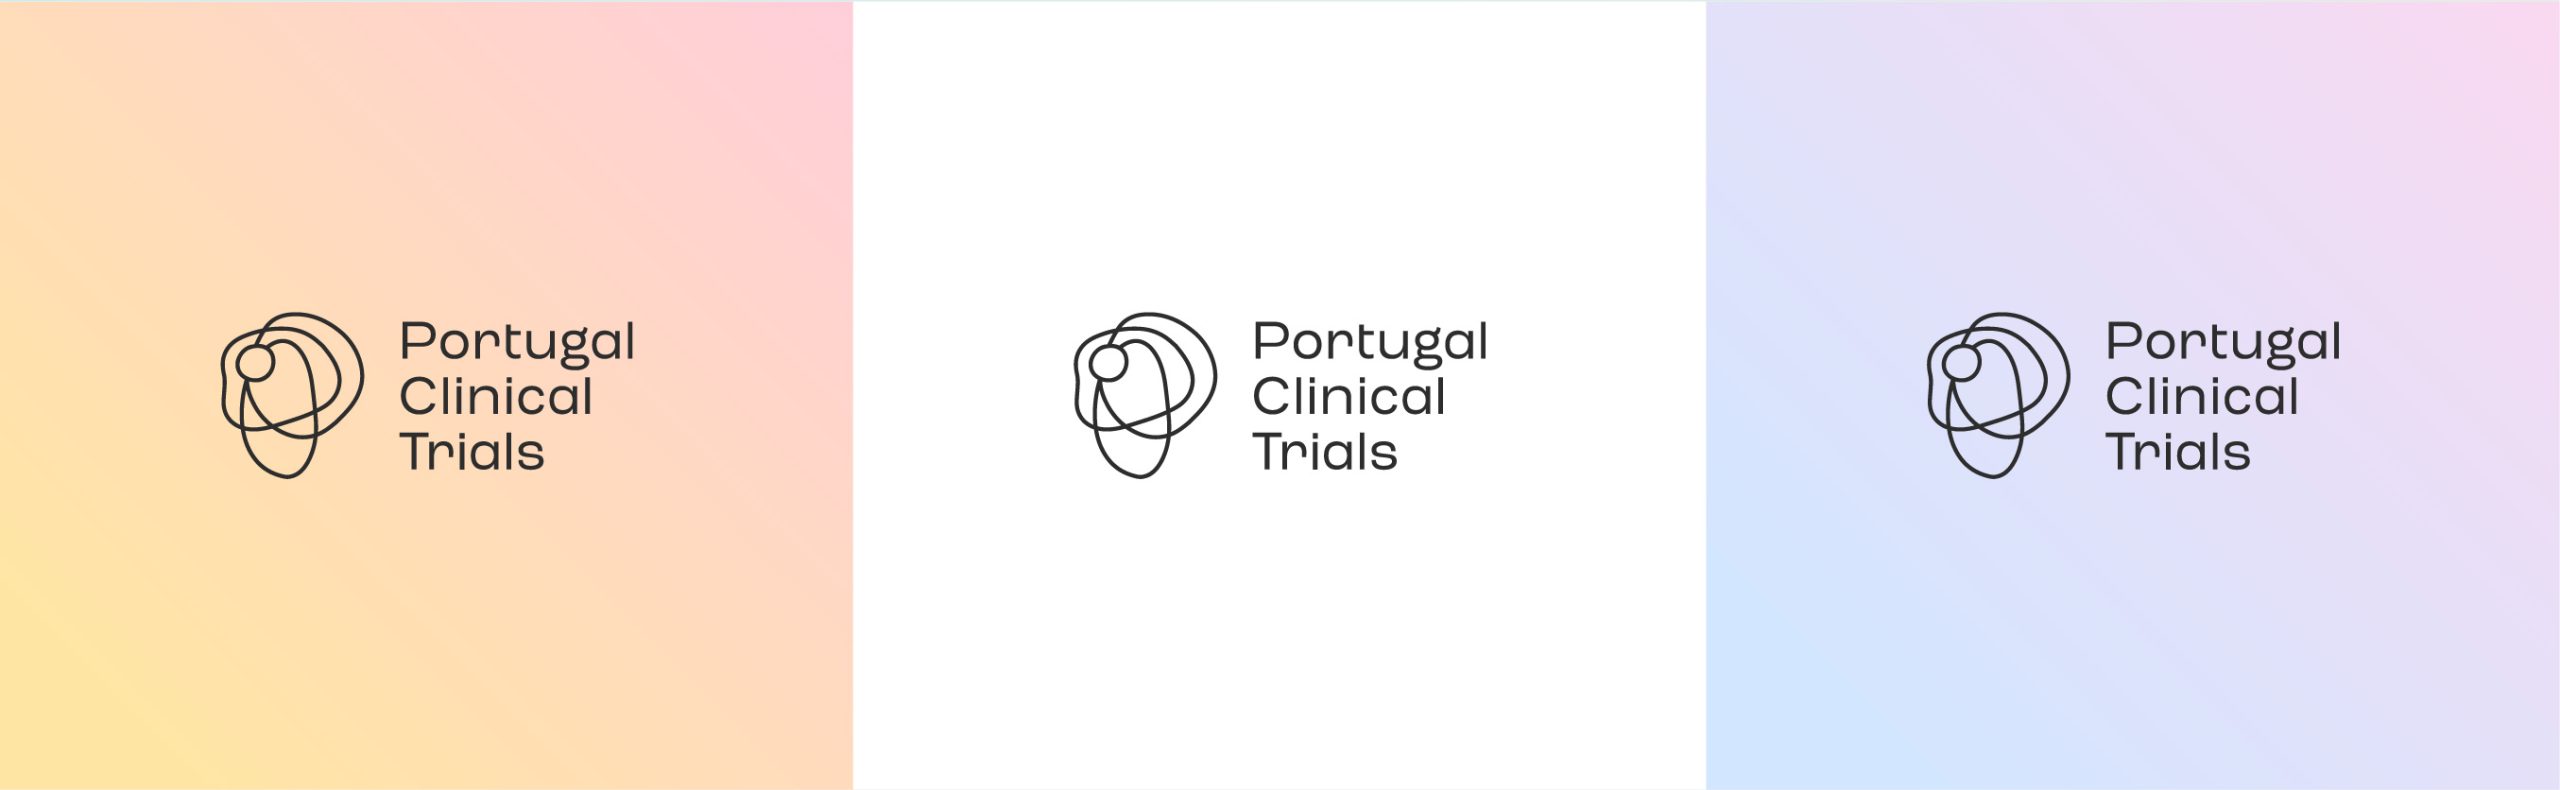 PortugalClinicalTrials_website_case_PCT_Website_conteudo2